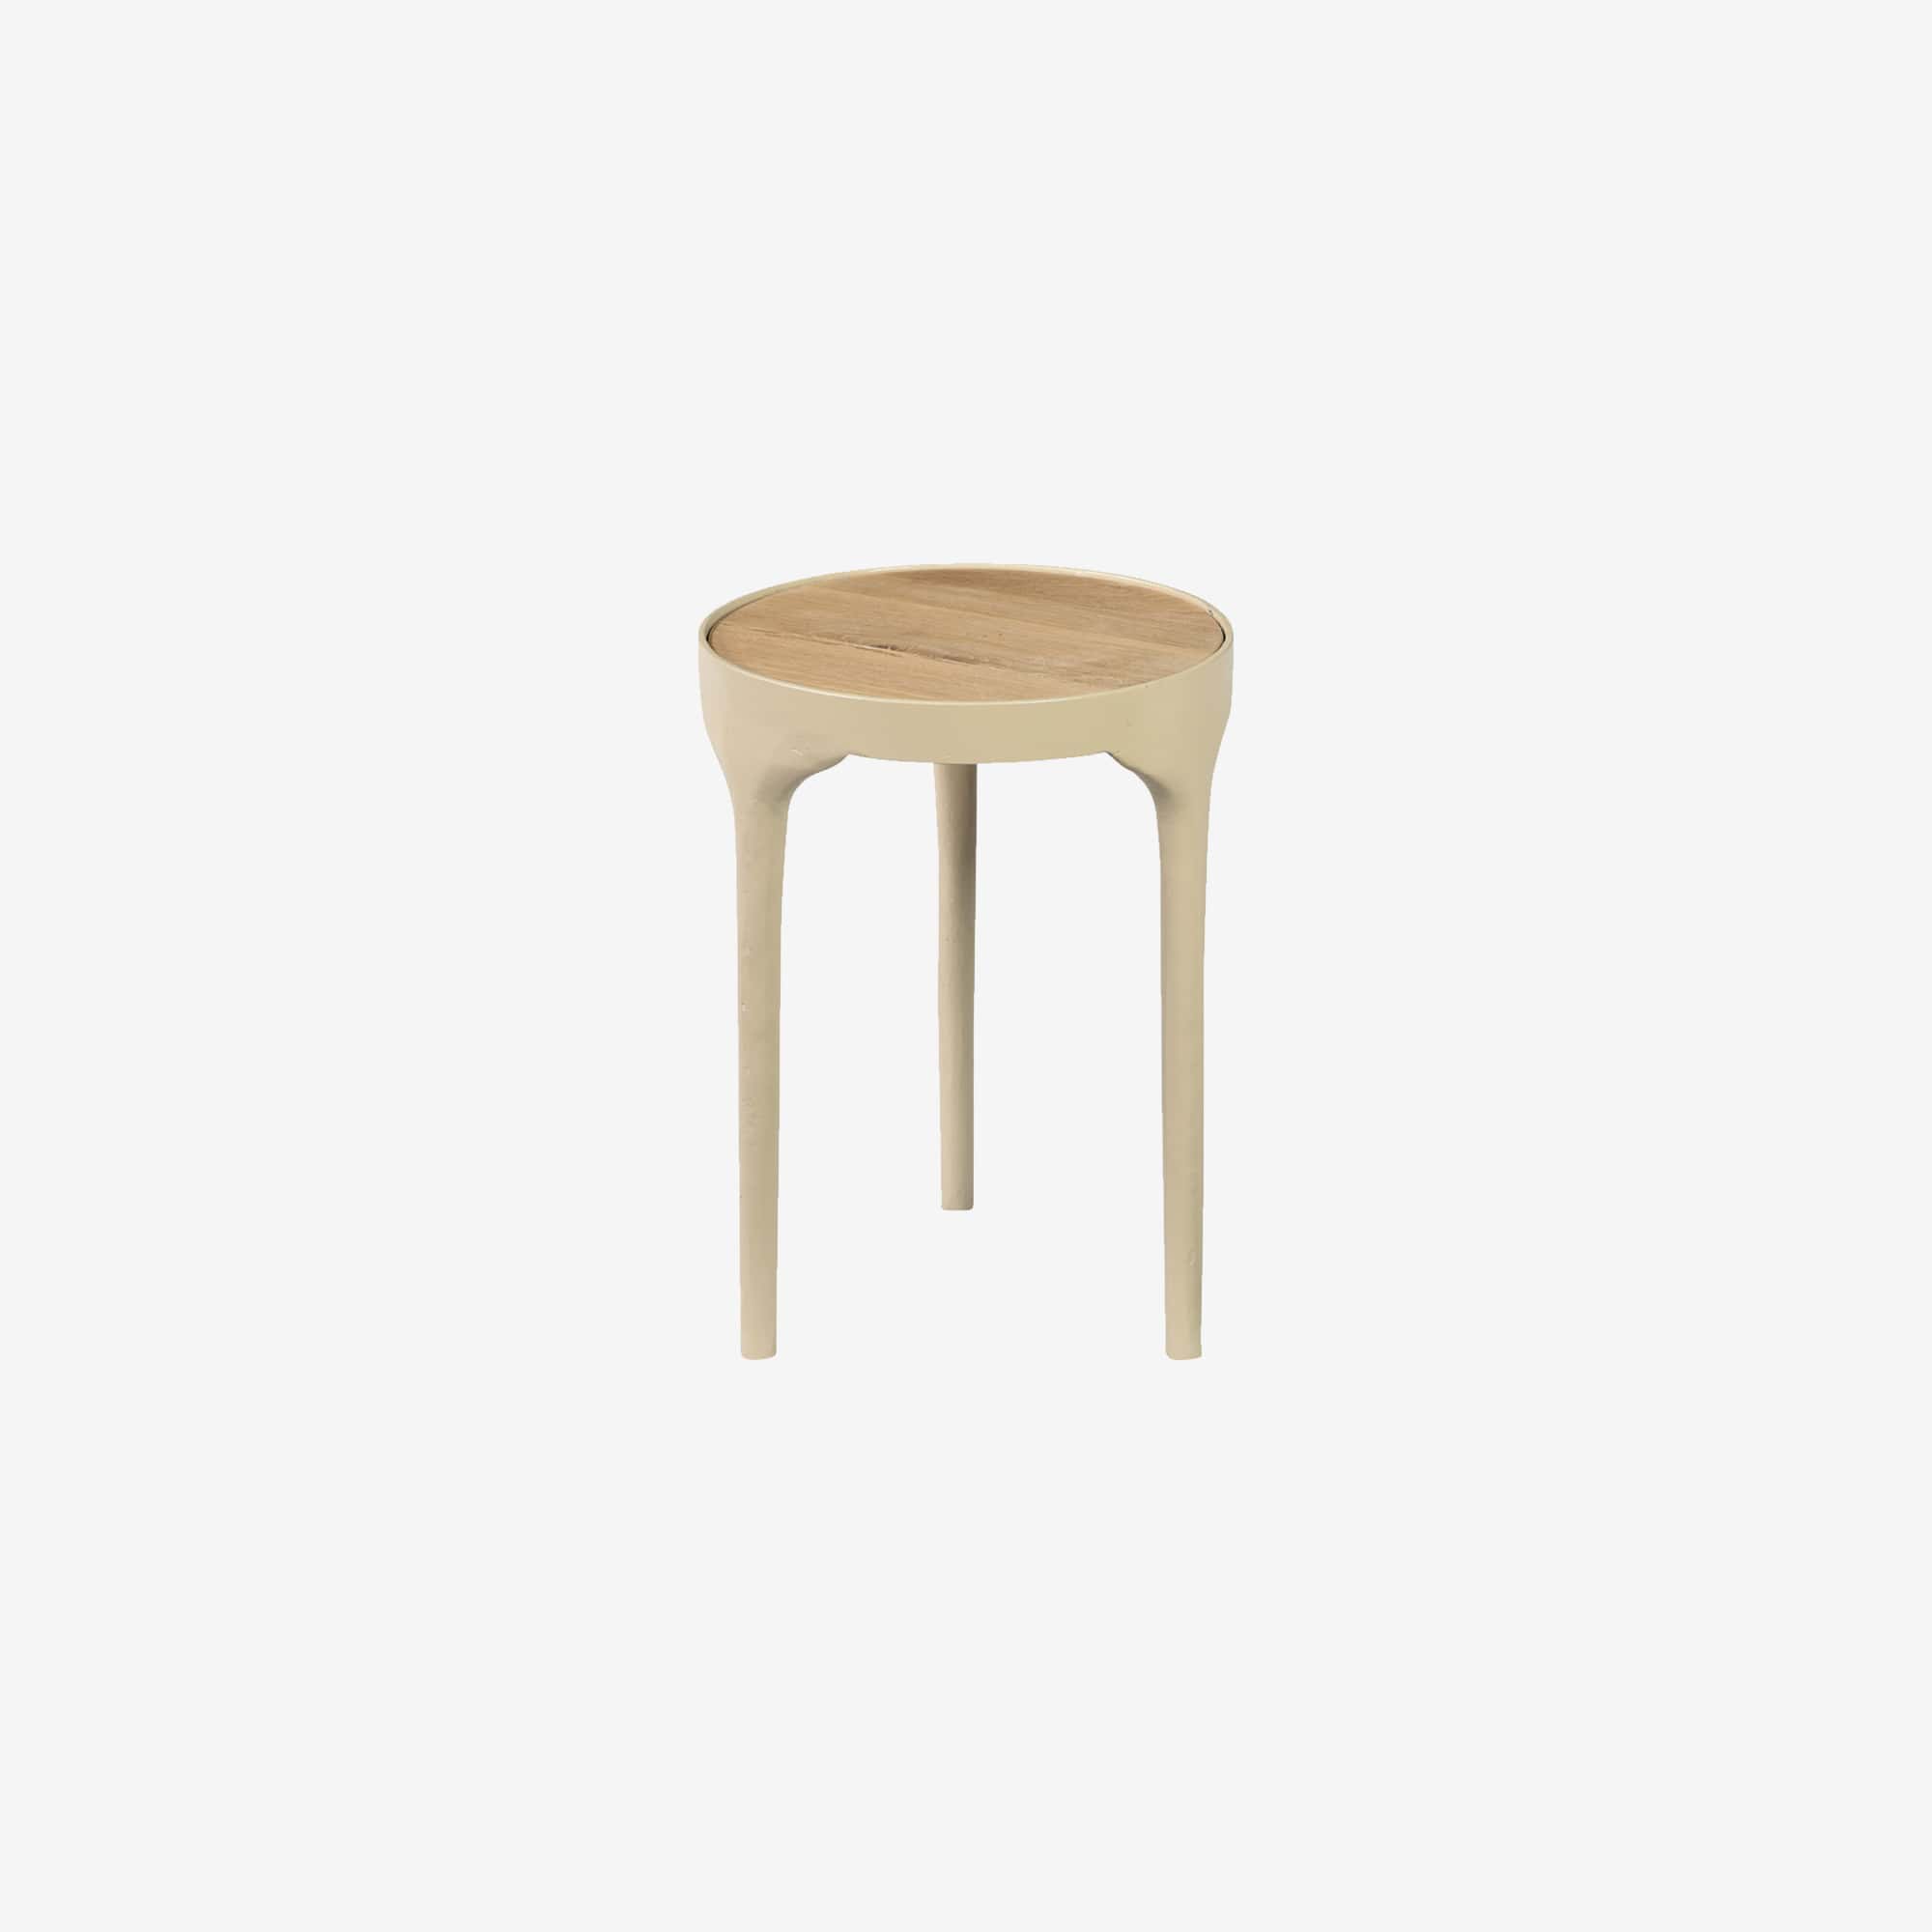 Coffee table iowa – small